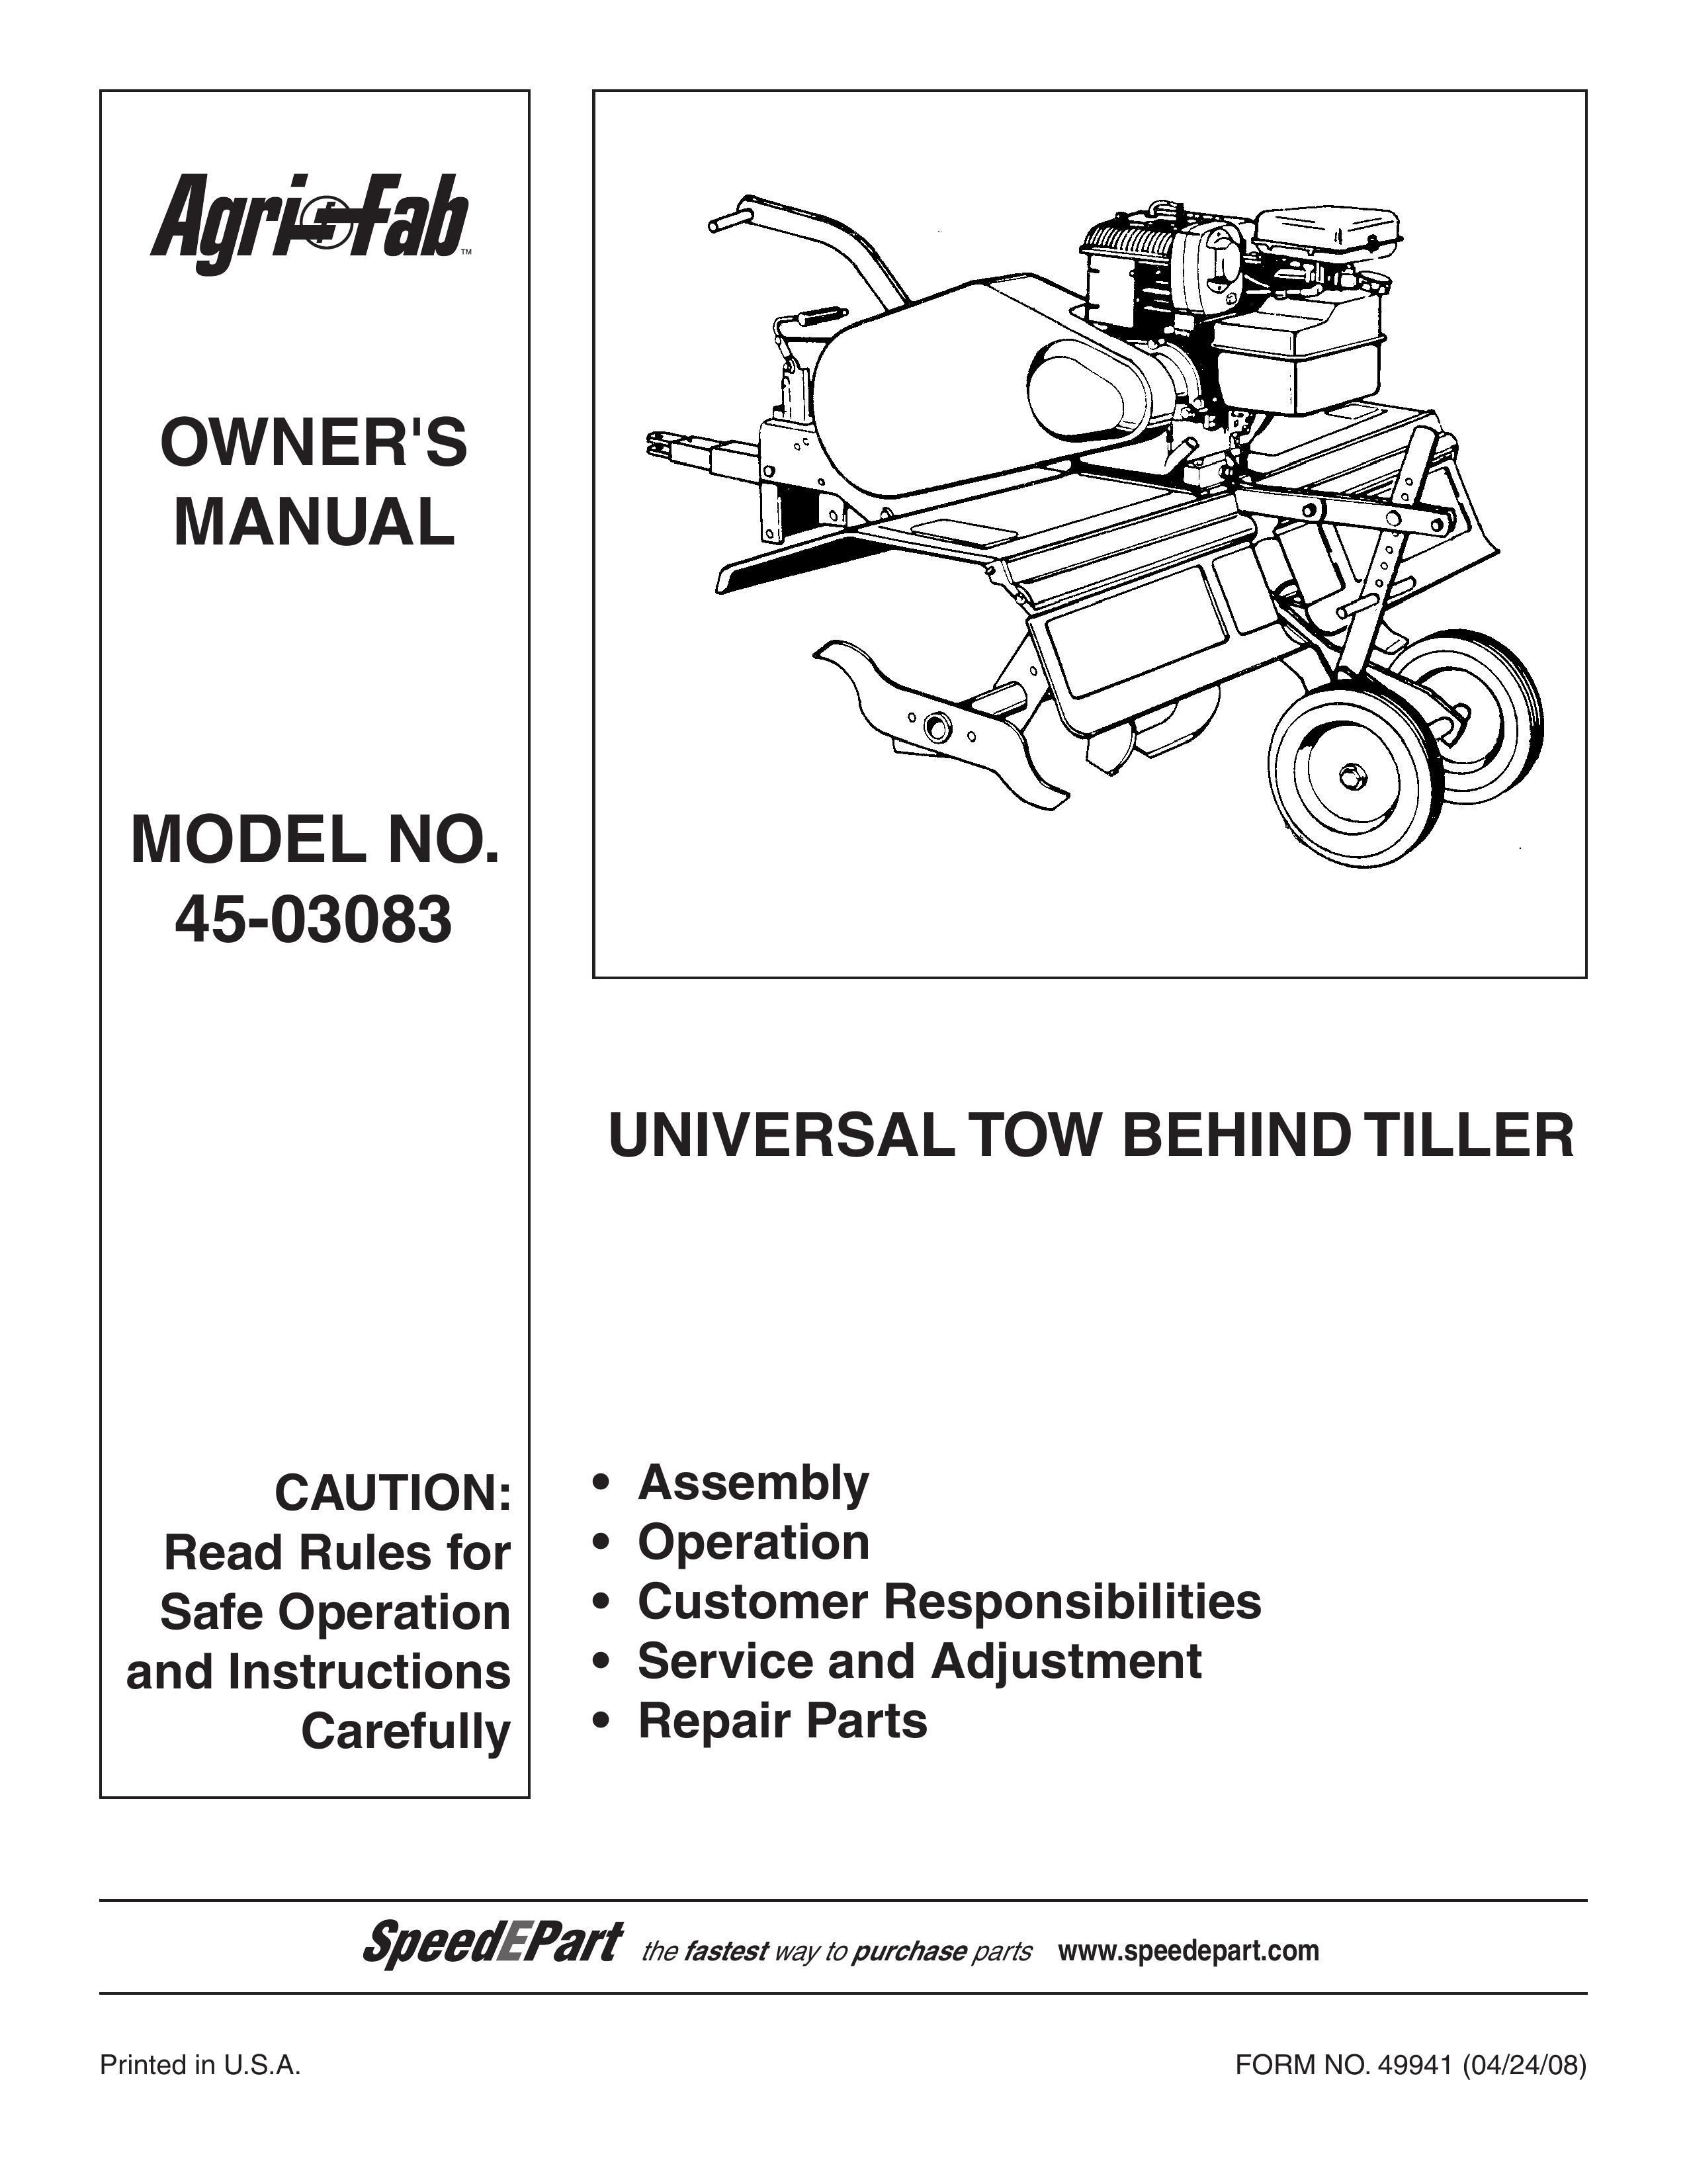 Agri-Fab 45-03083 Tiller User Manual